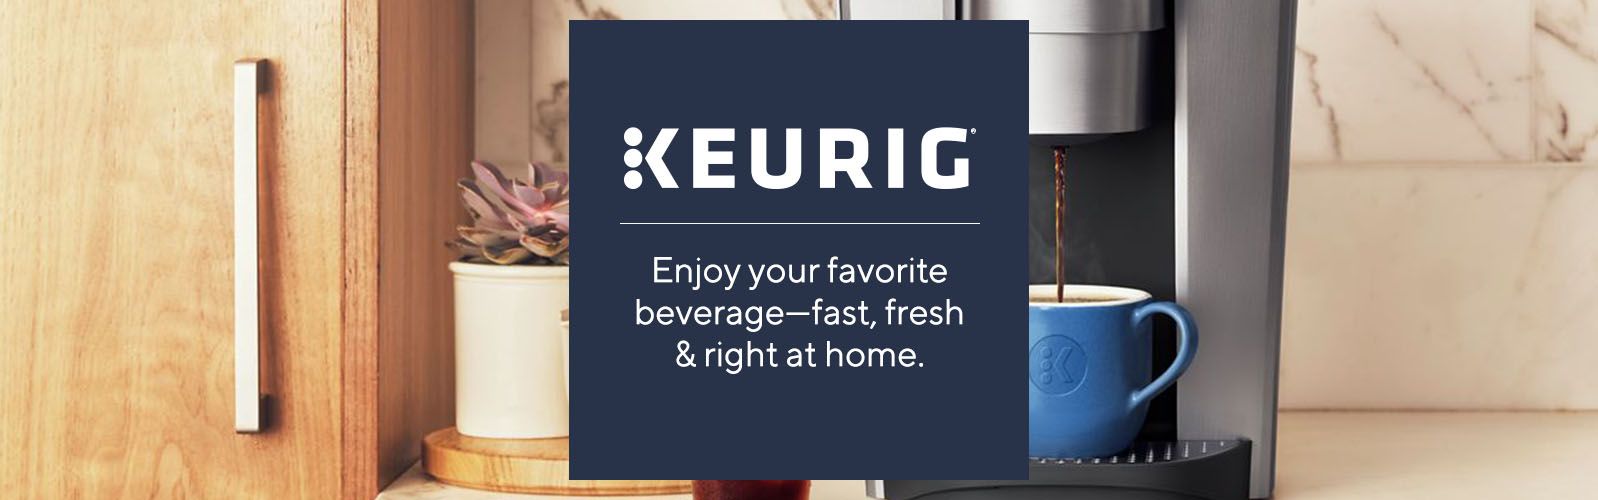 Keurig K-Cafe Essentials Single Serve K-Cup Coffee Maker - Factory Refurbished